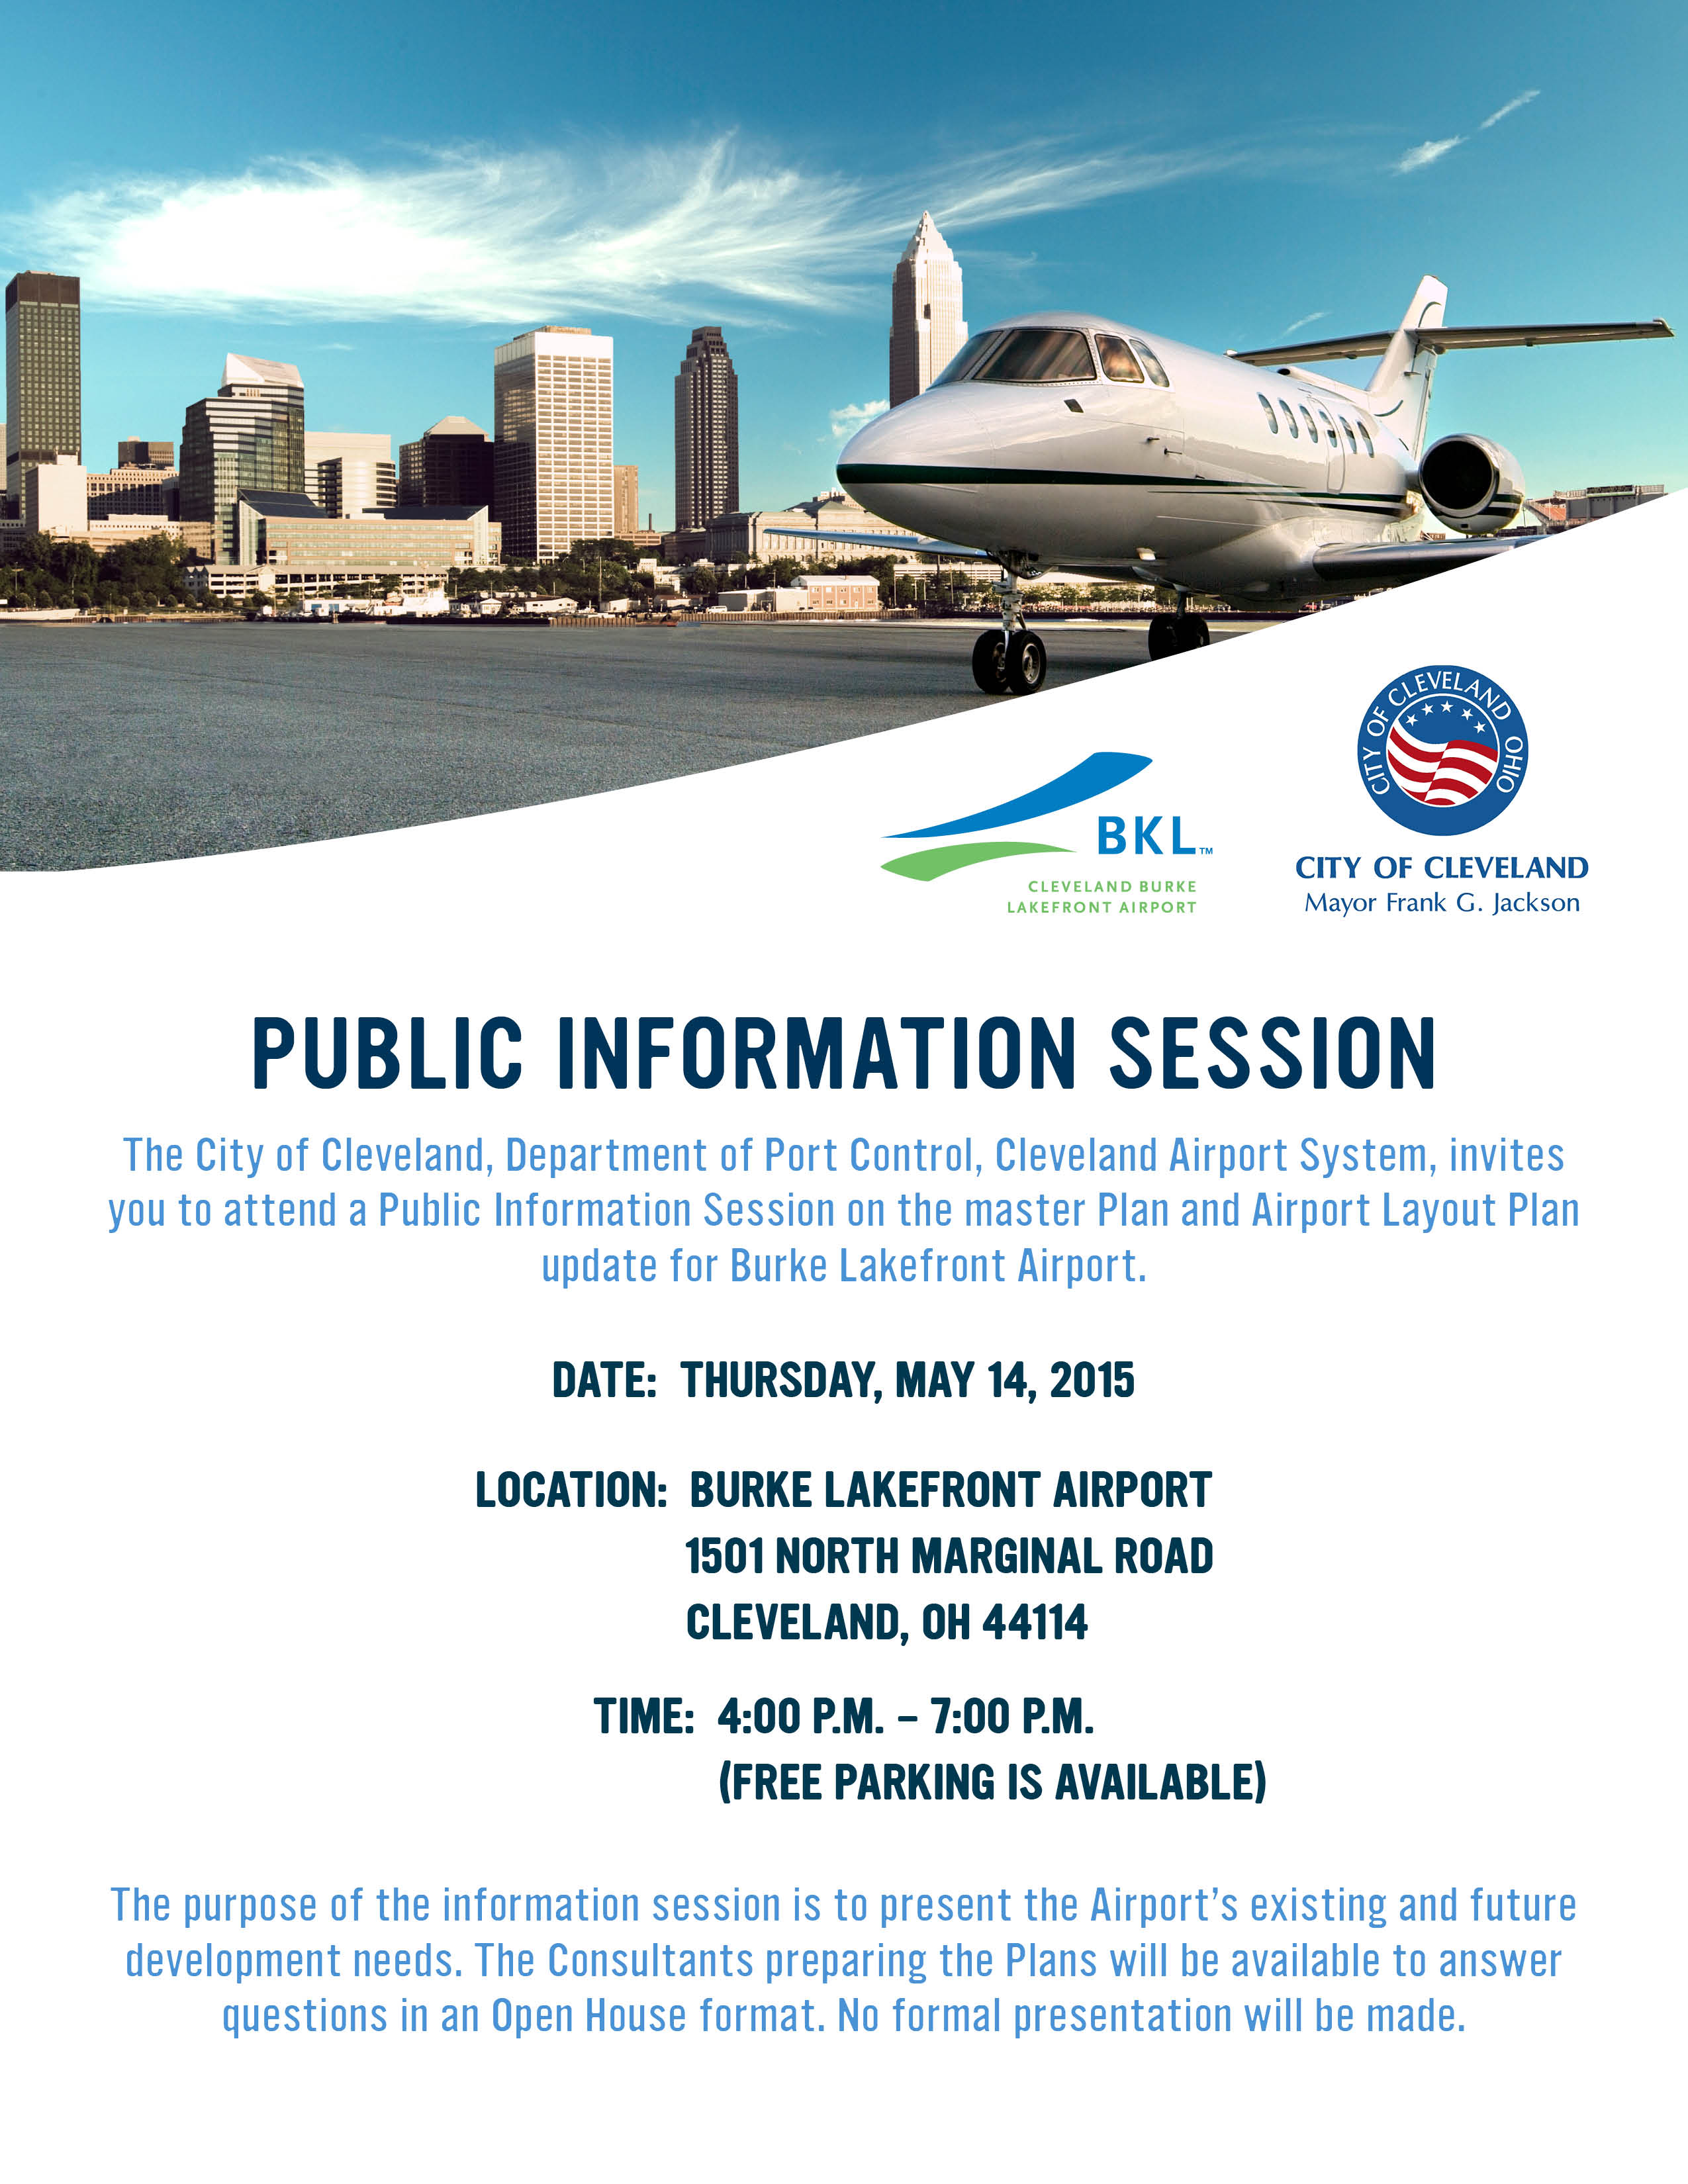 Burke Lakefront Airport - Public Information Session